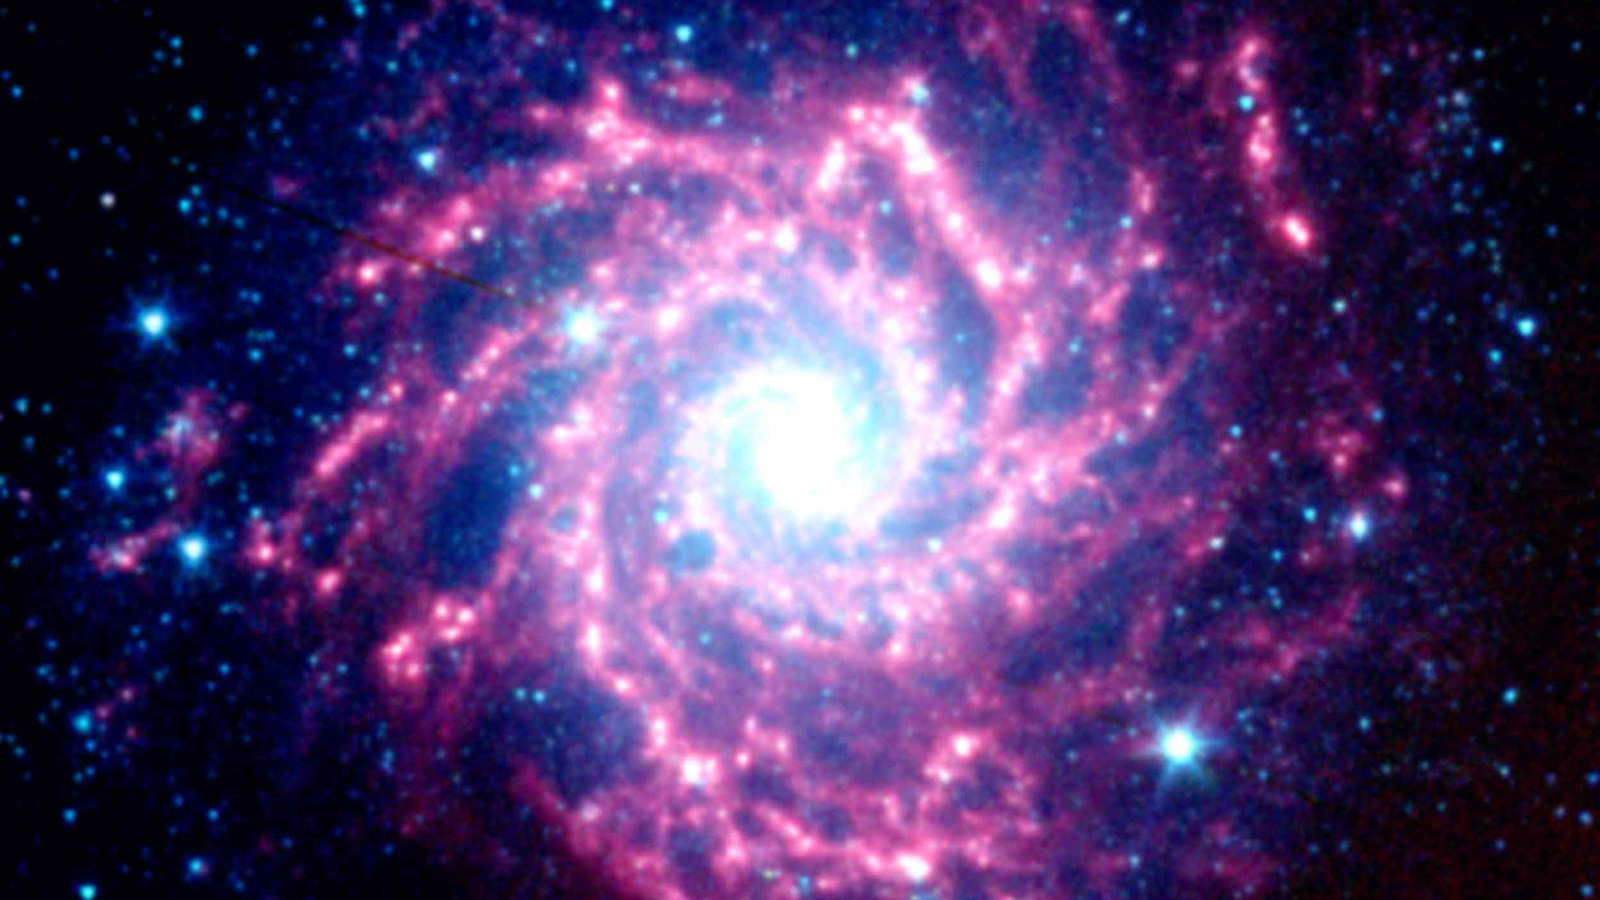 Dust in a spiral galaxy